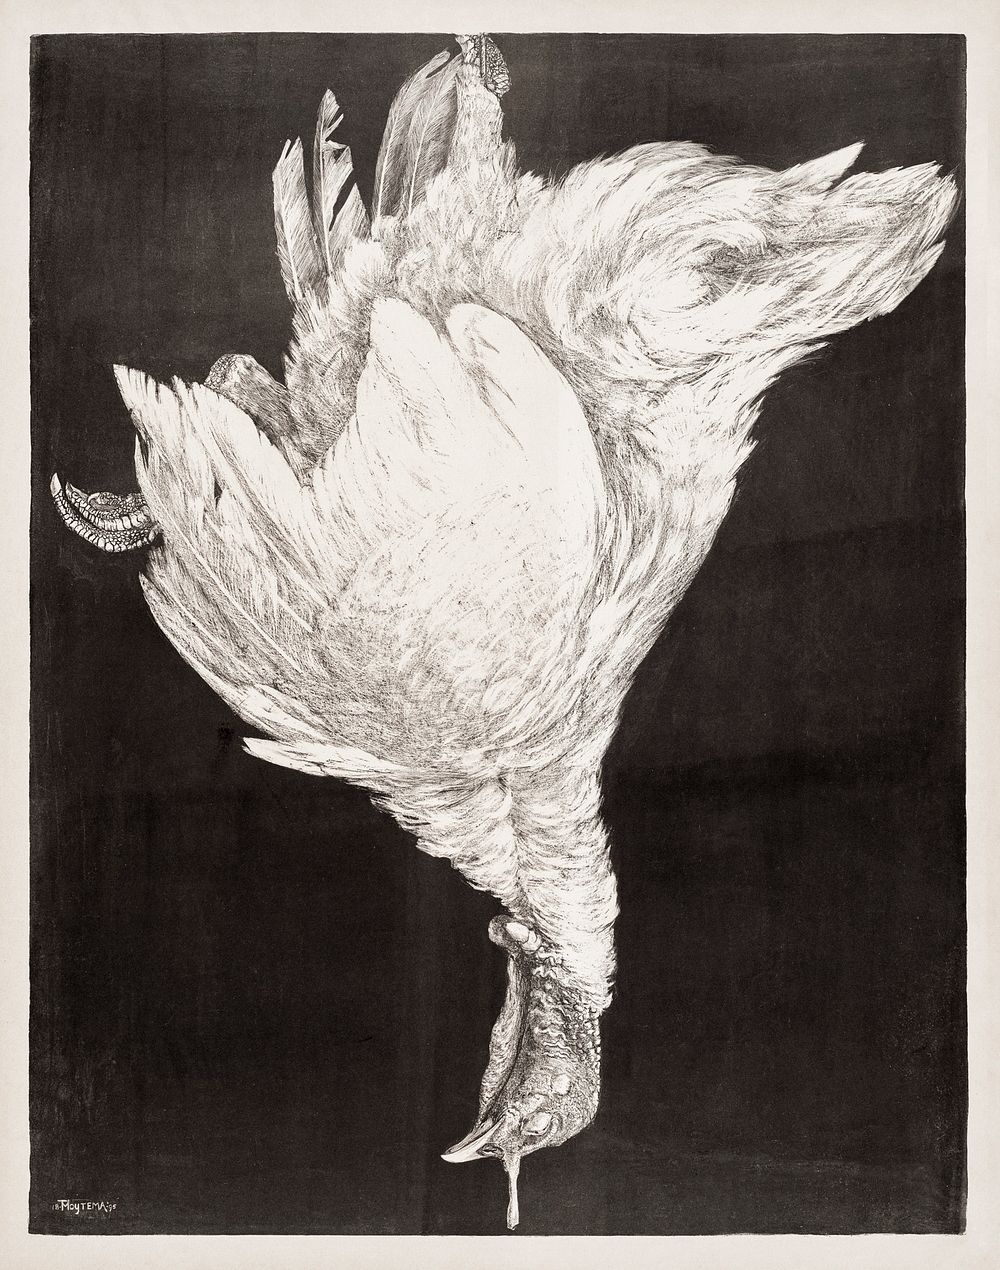 Doode Kalkoen (ca. 1874&ndash;1917) print in high resolution by Theo van Hoytema. Original from The Rijksmuseum. Digitally…